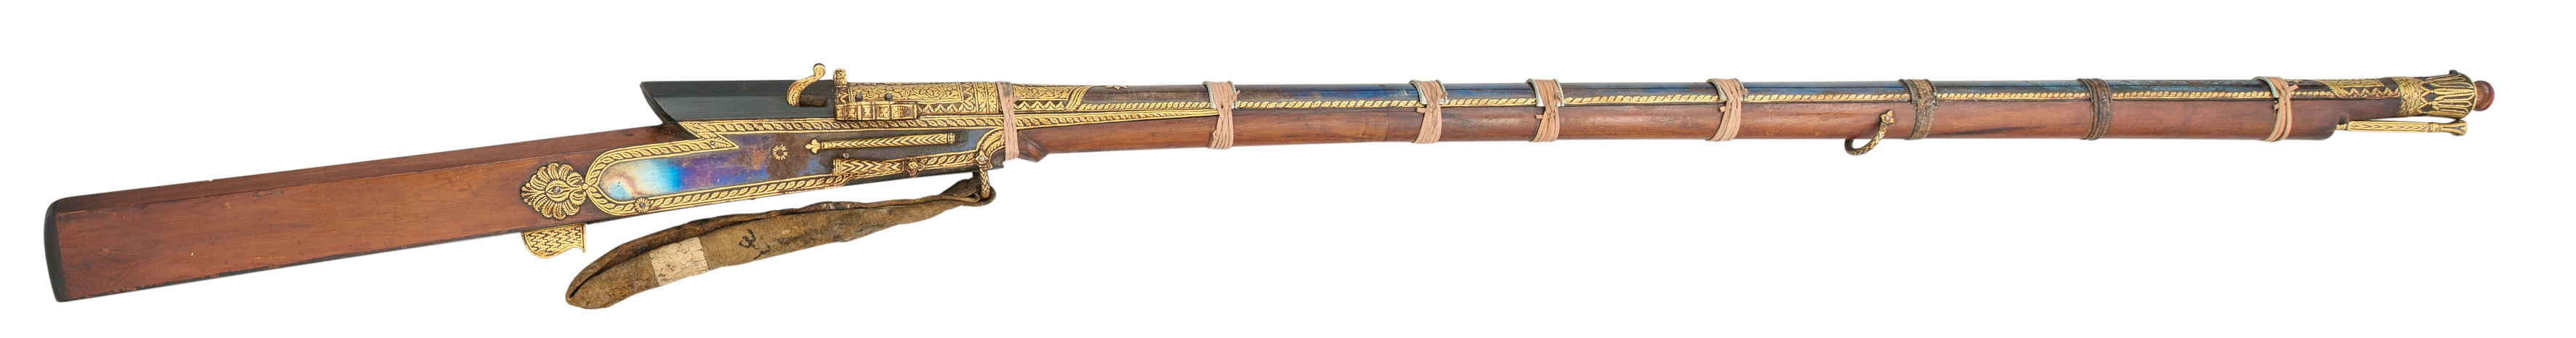 A FINE 16 BORE NORTH INDIAN MATCHLOCK GUN (TORADOR), 18TH/19TH CENTURY, PROBABLY JAIPUR, RAJASTHAN - Image 2 of 2